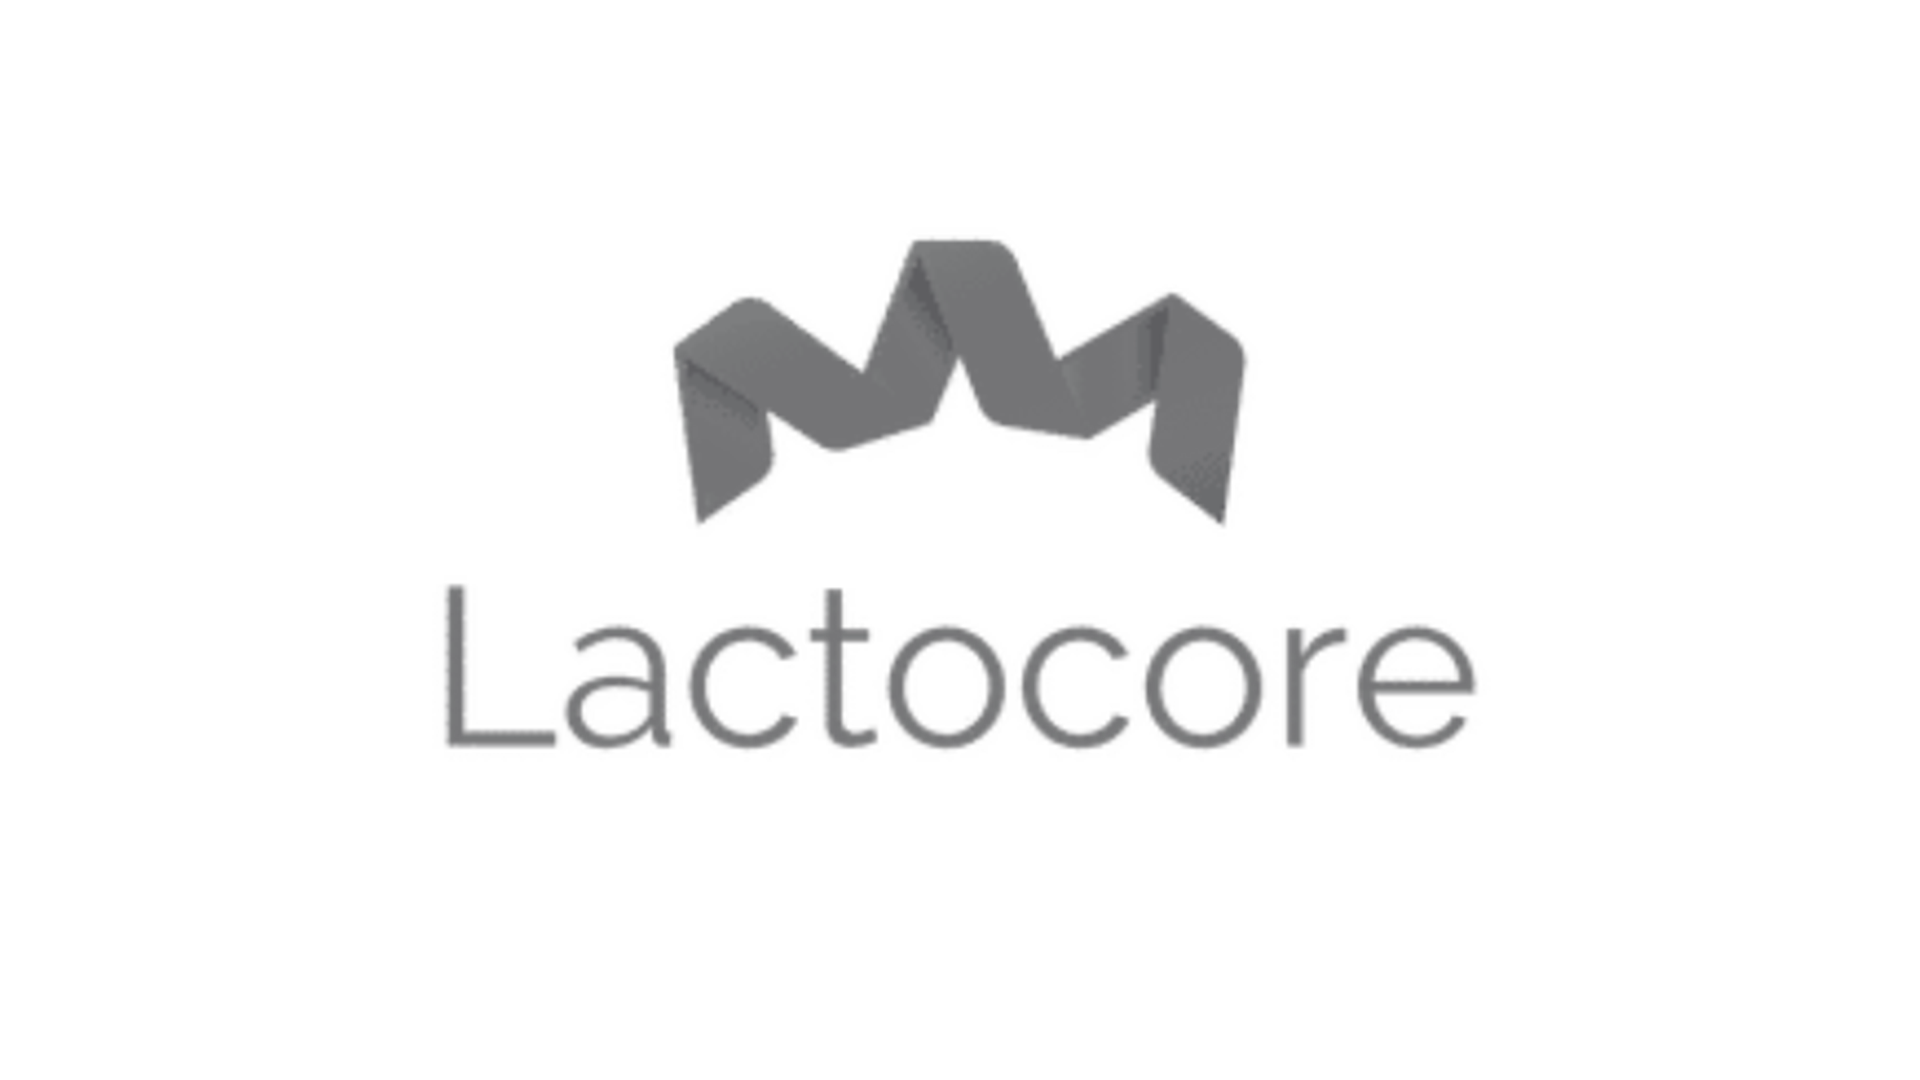 Lactocore2 startup